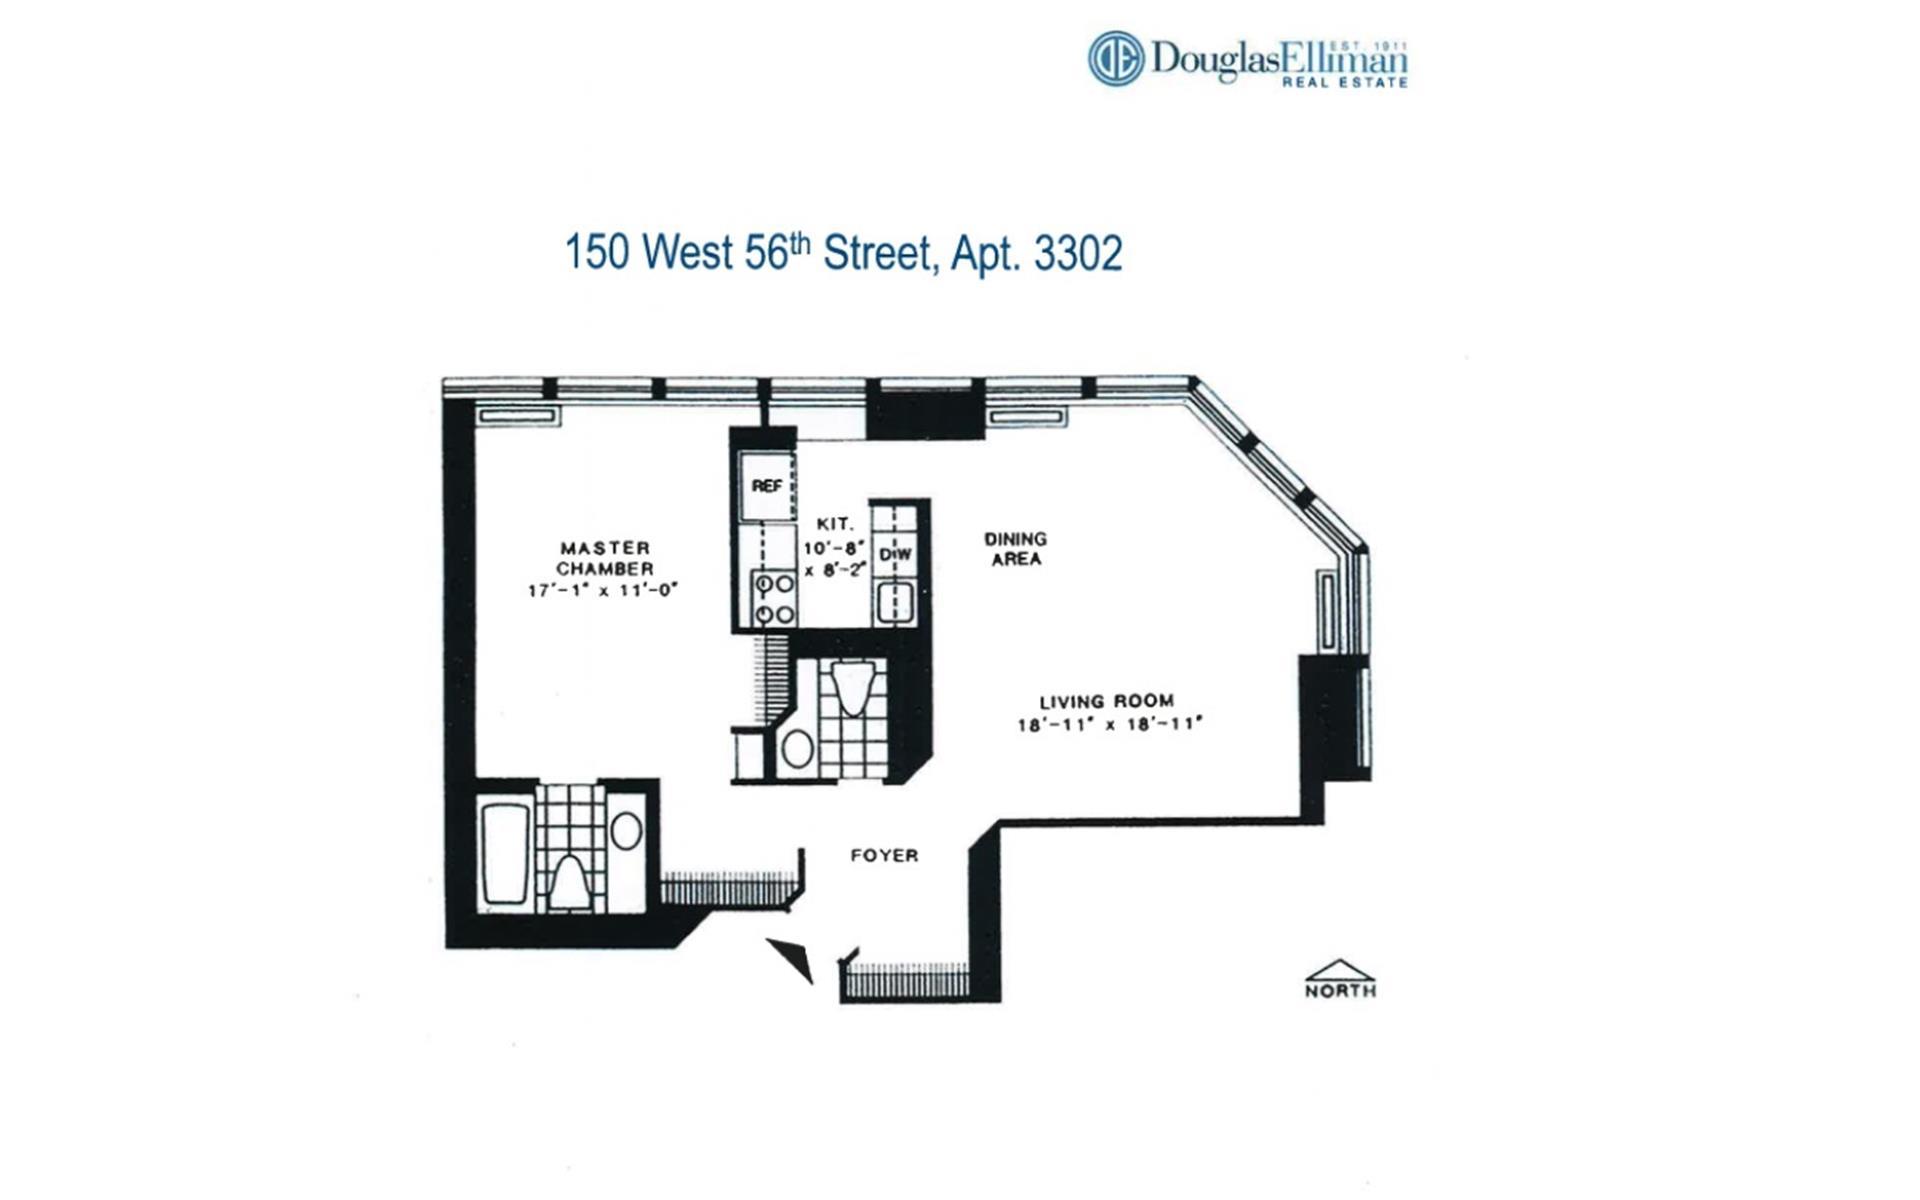 Floorplan for 150 West 56th Street, 3302